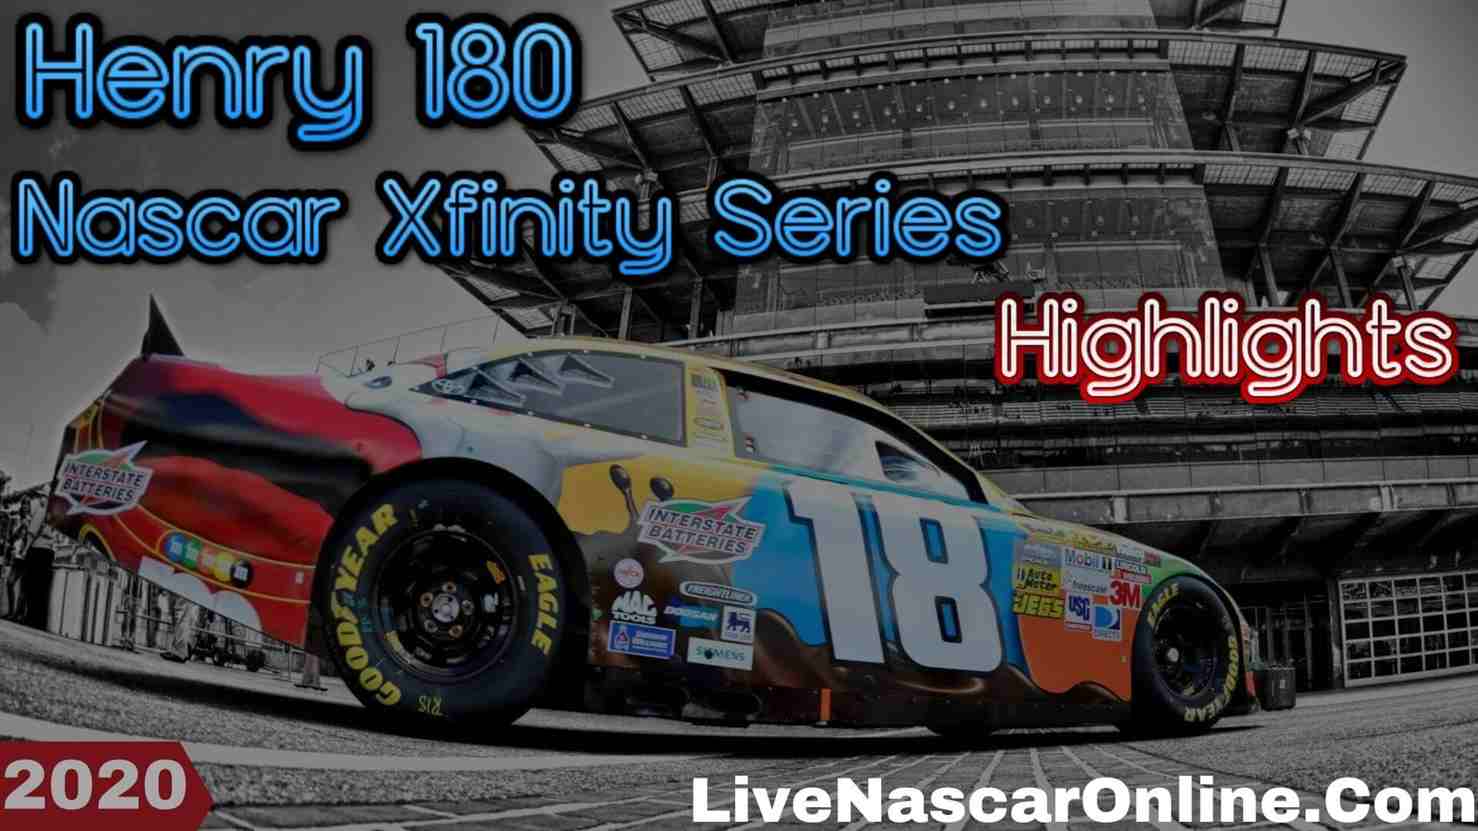 Henry 180 Nascar Xfinity Series Highlights 2020